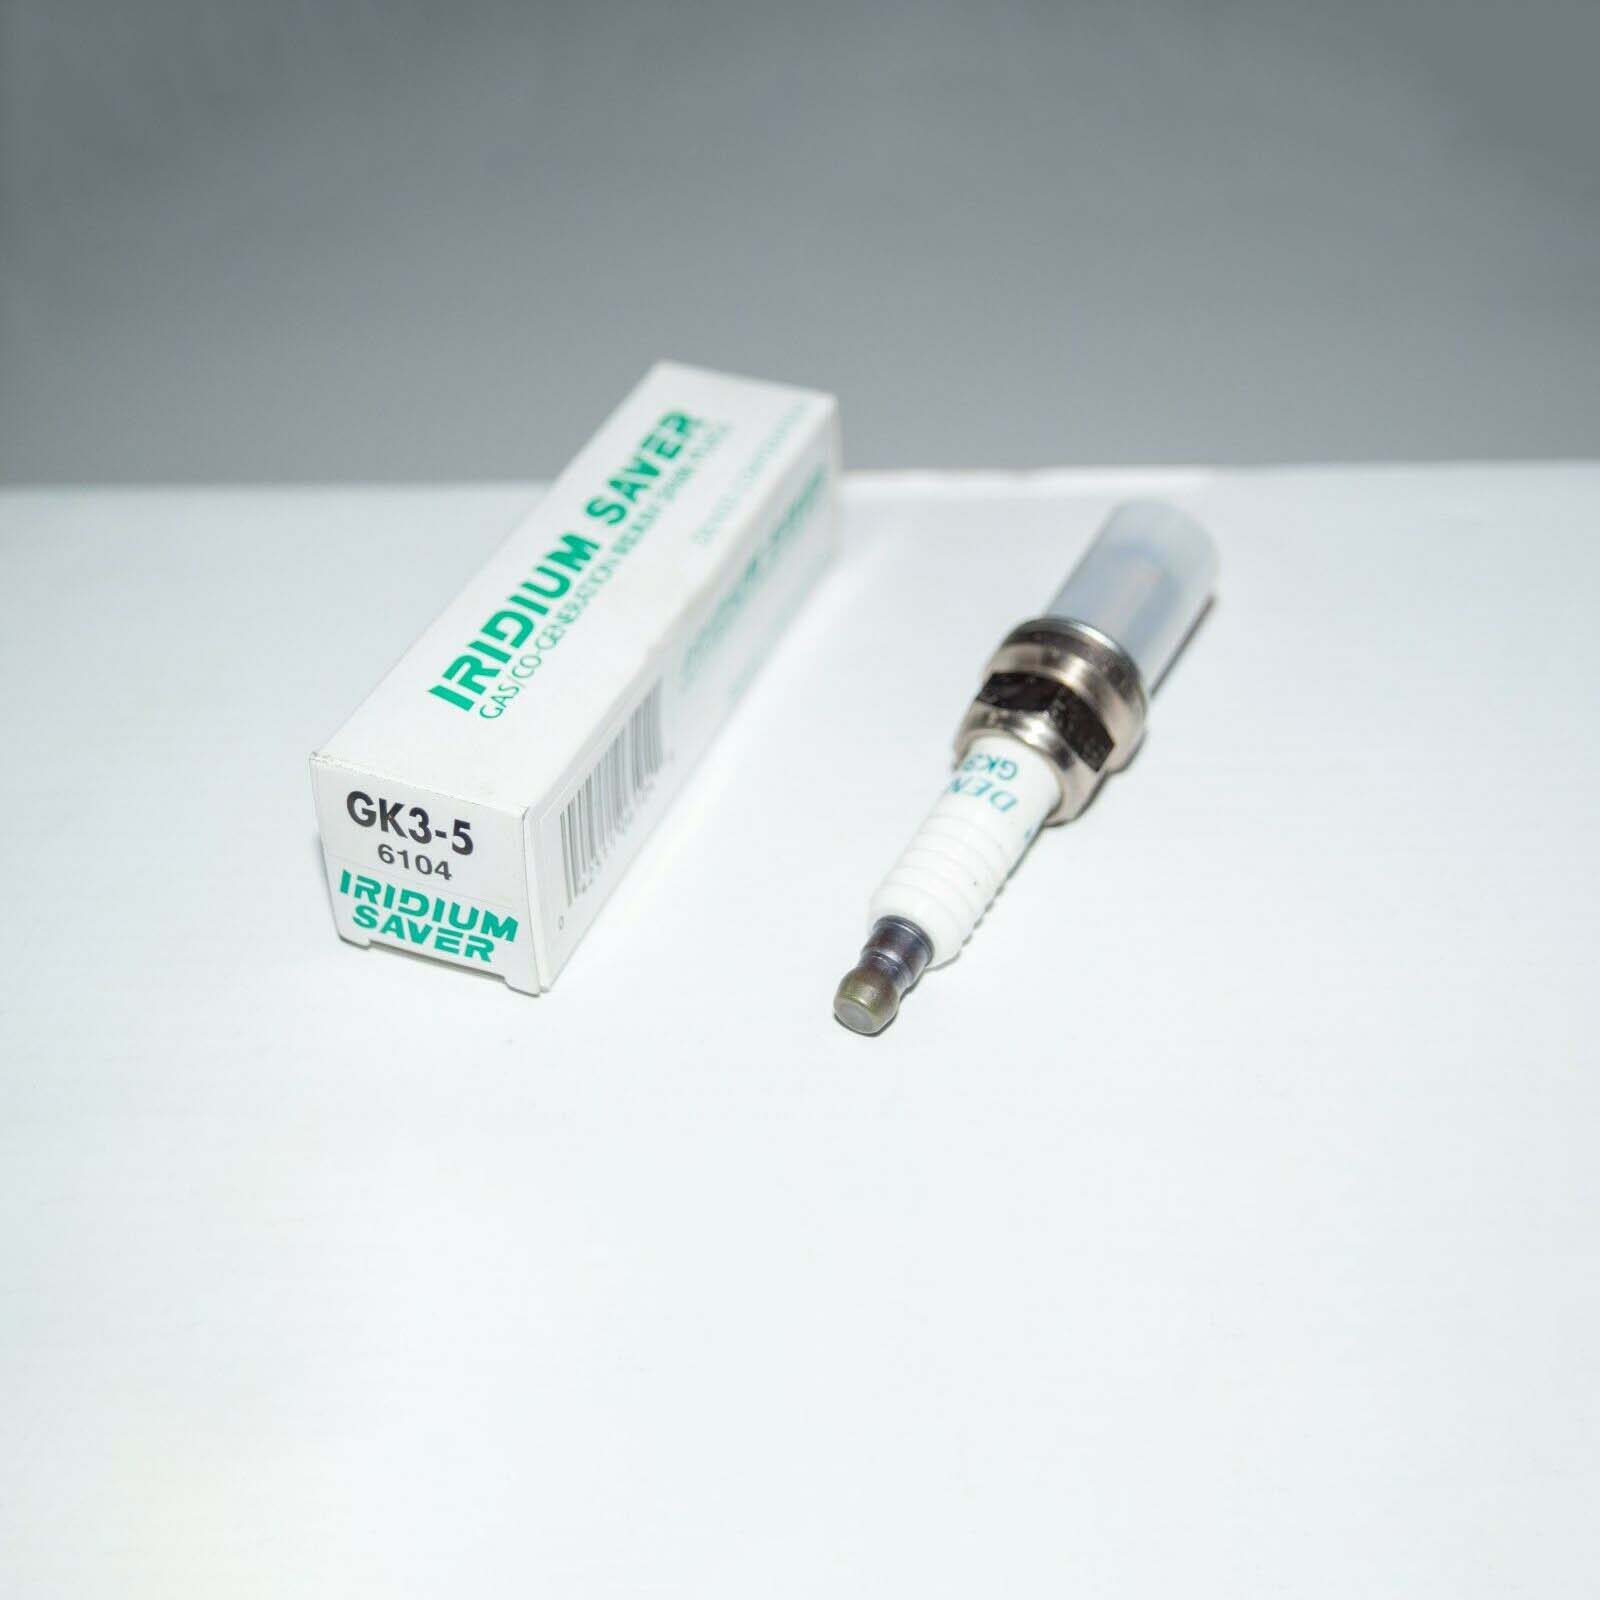 GK3-5A Denso Iridium Spark Plug